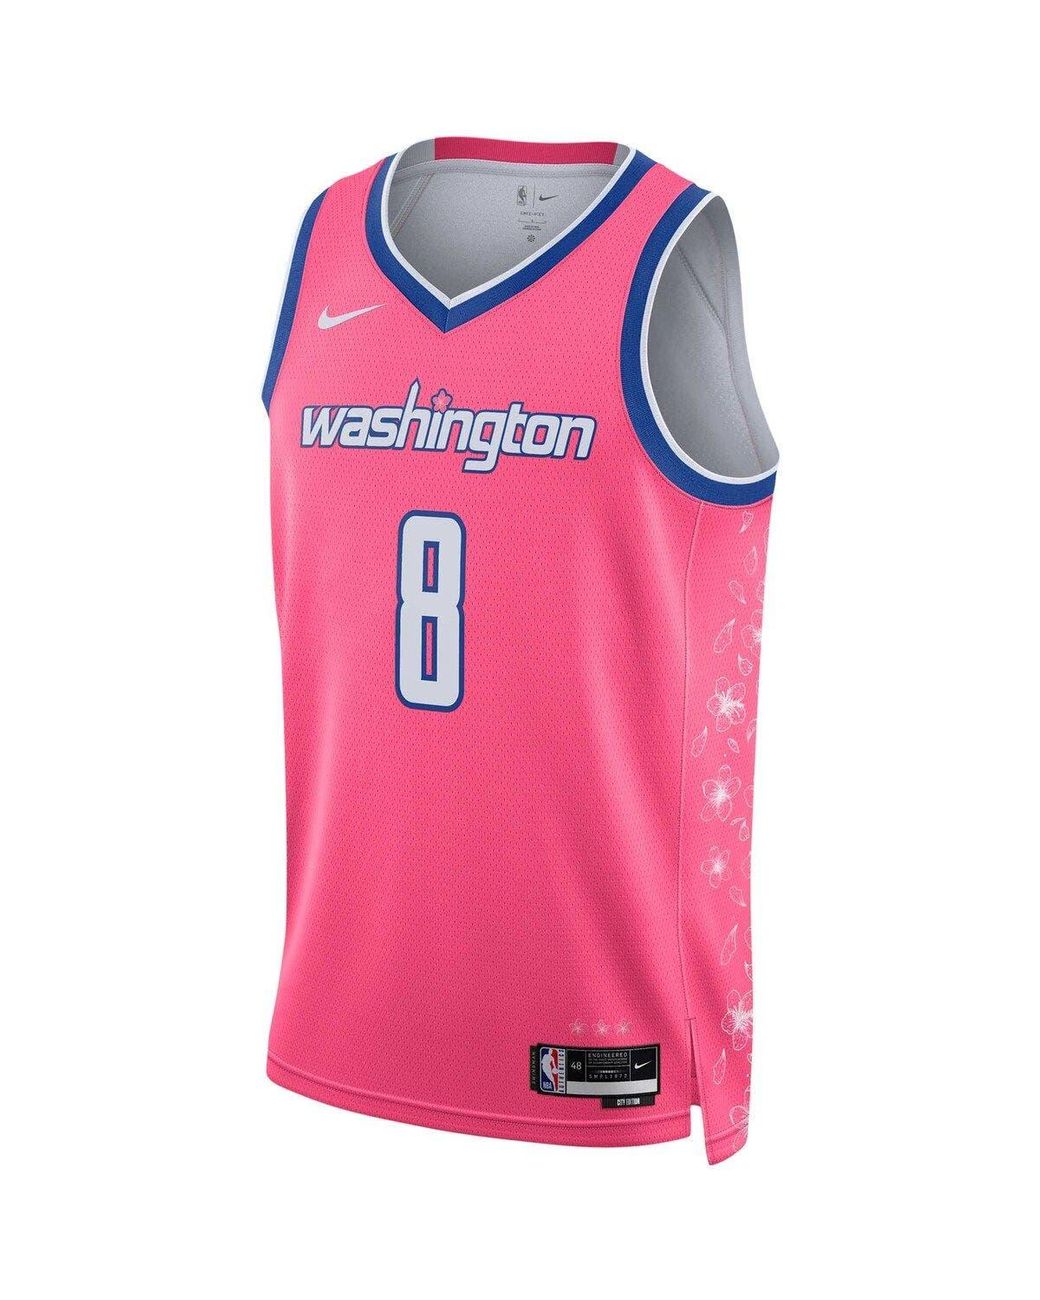 Nike Washington Wizards City Edition Jersey “Rui Hachimura” Size